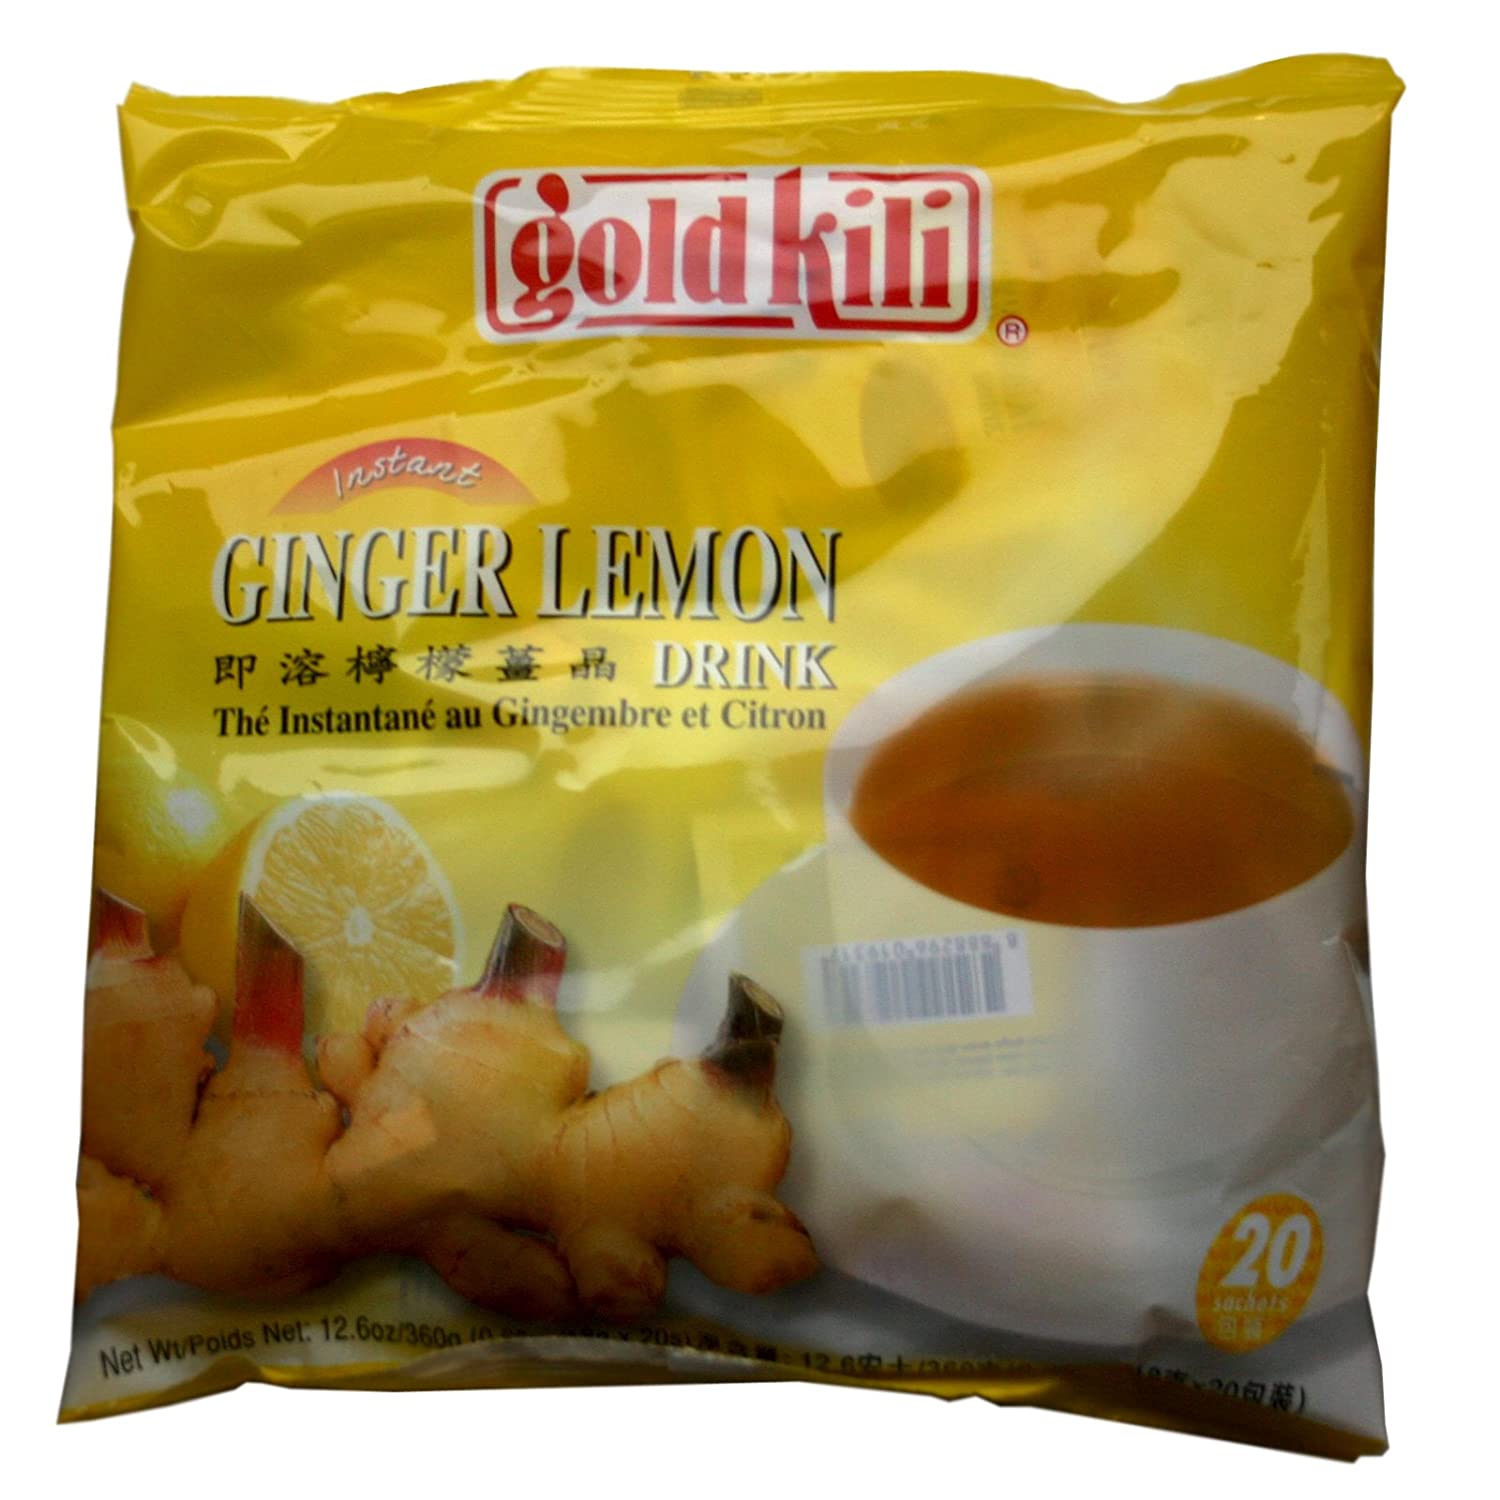 gold kili the instantane au gingembre et citron (instant ginger lemon drink) - 12.7oz